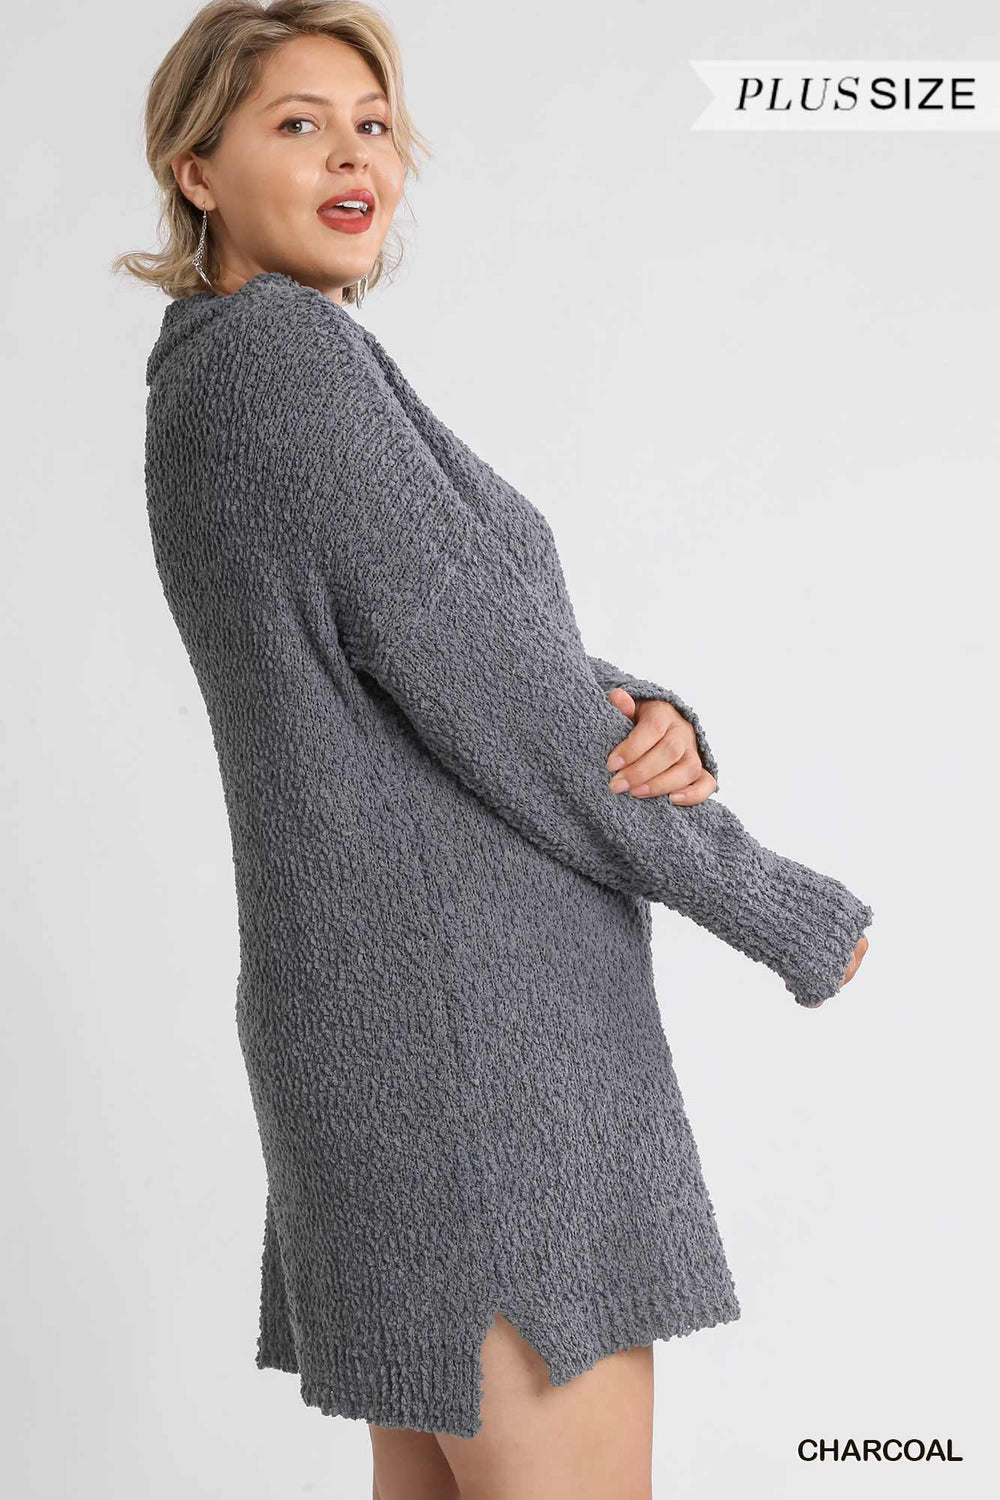 Umgee Melanie Cowl Neck Bouclé Sweater Dress - Charcoal  RYSE Clothing Co.   